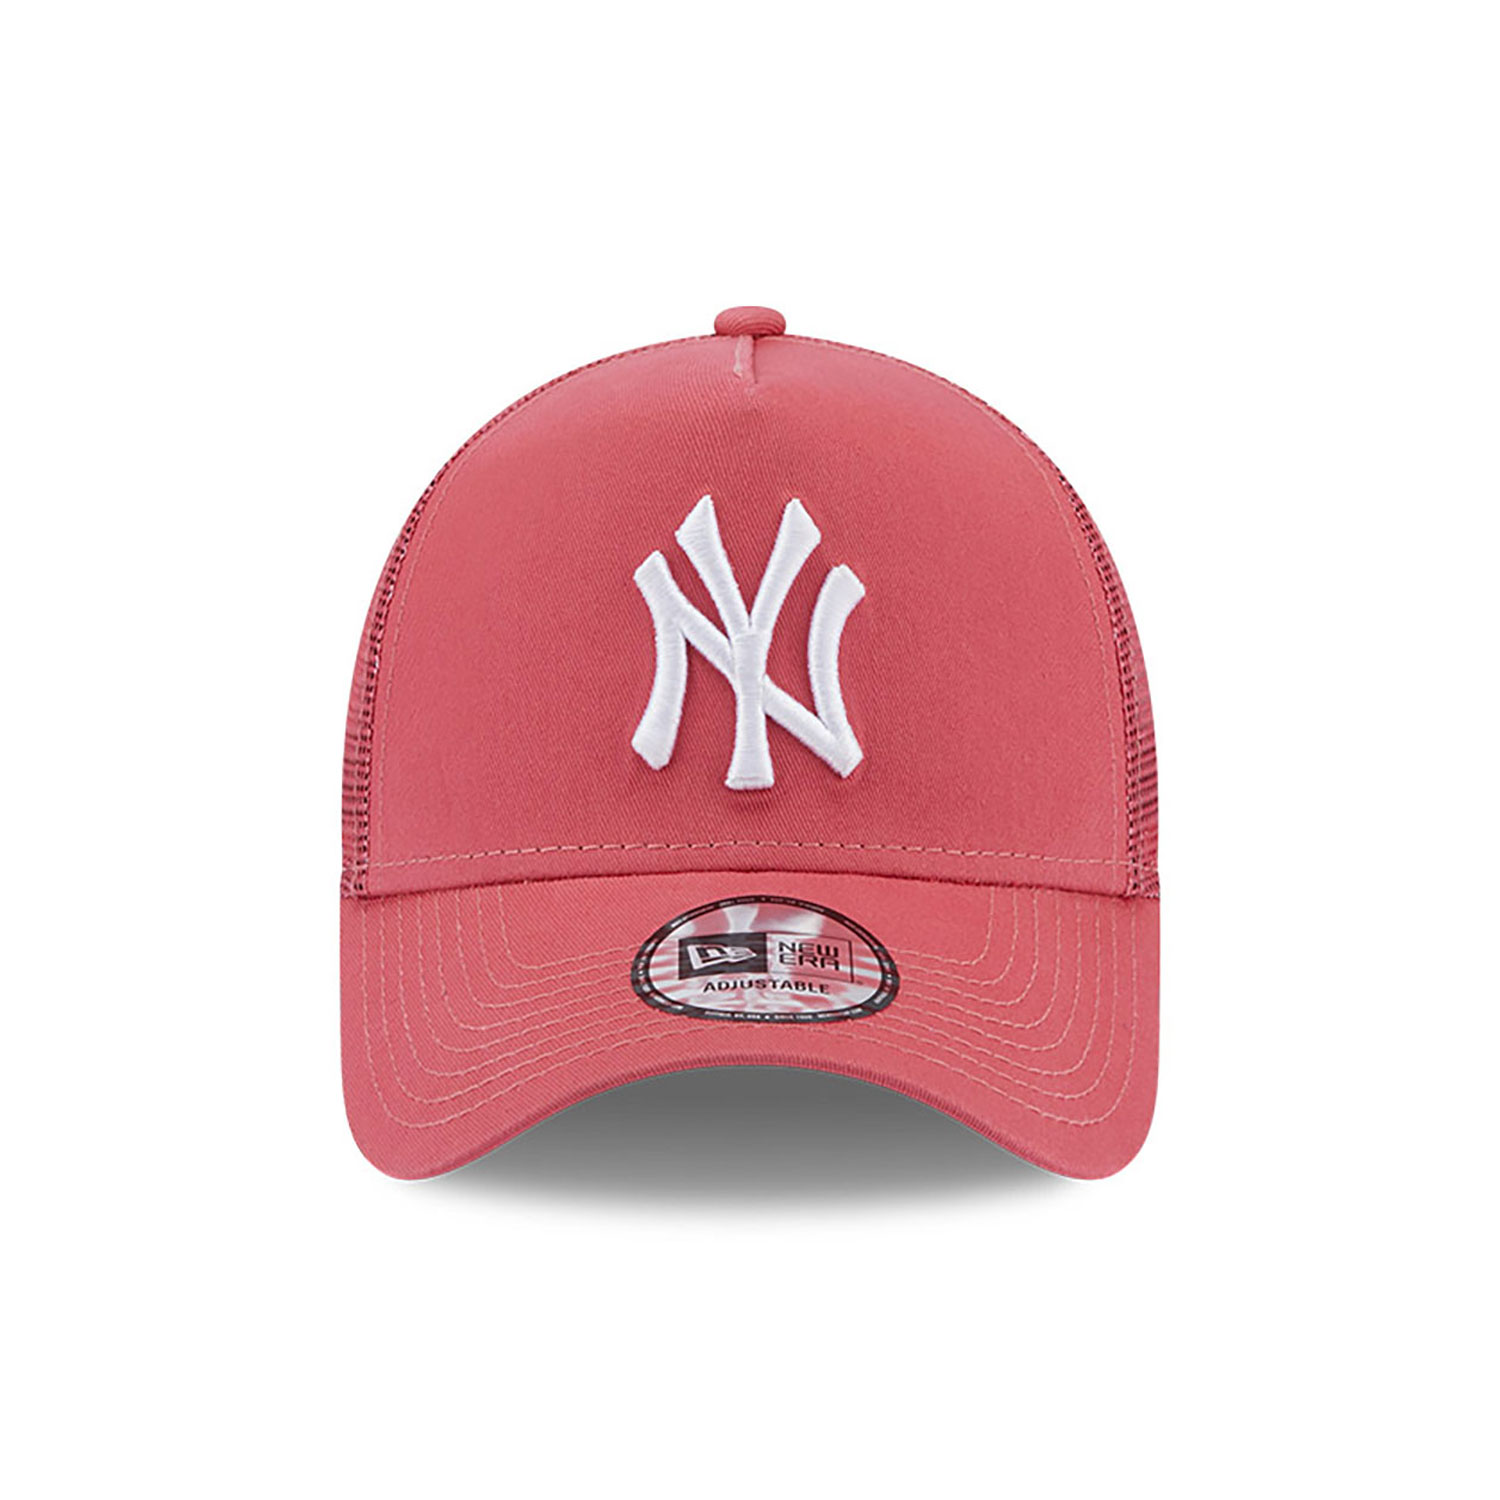 Gorras NY | Gorras de los York Yankees | New Era Cap